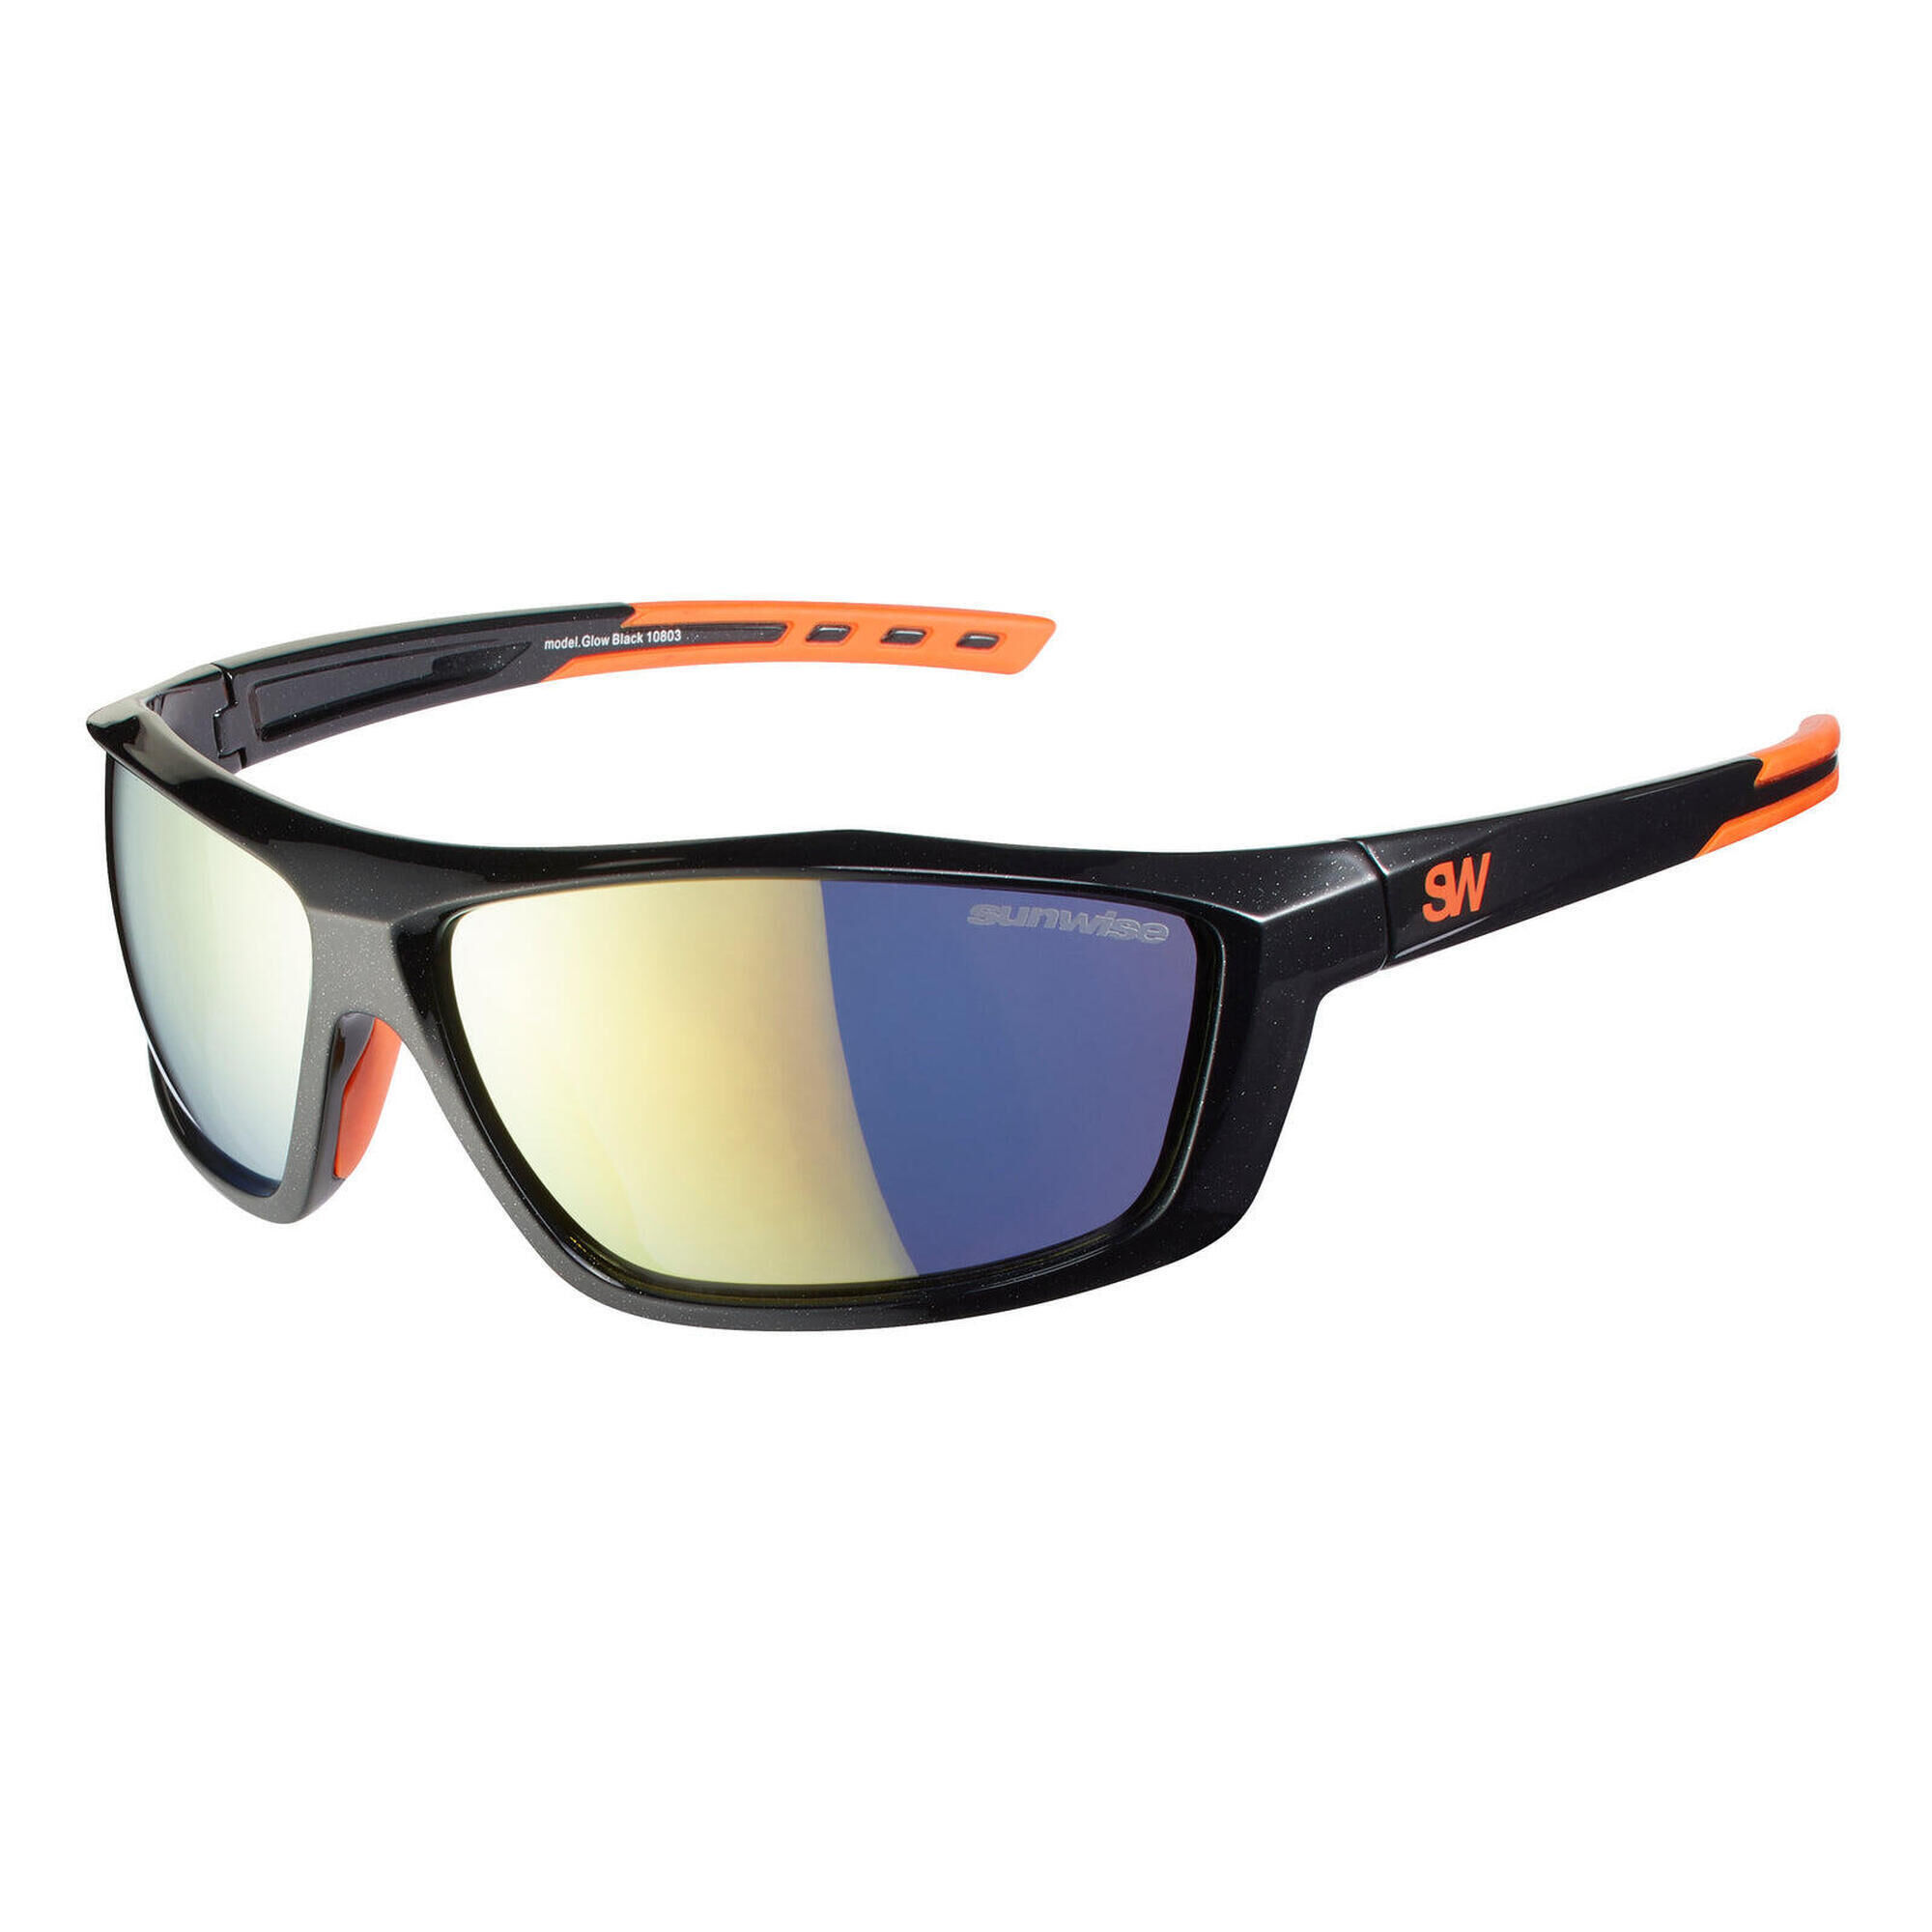 SUNWISE Glow Sports Sunglasses - Category 3